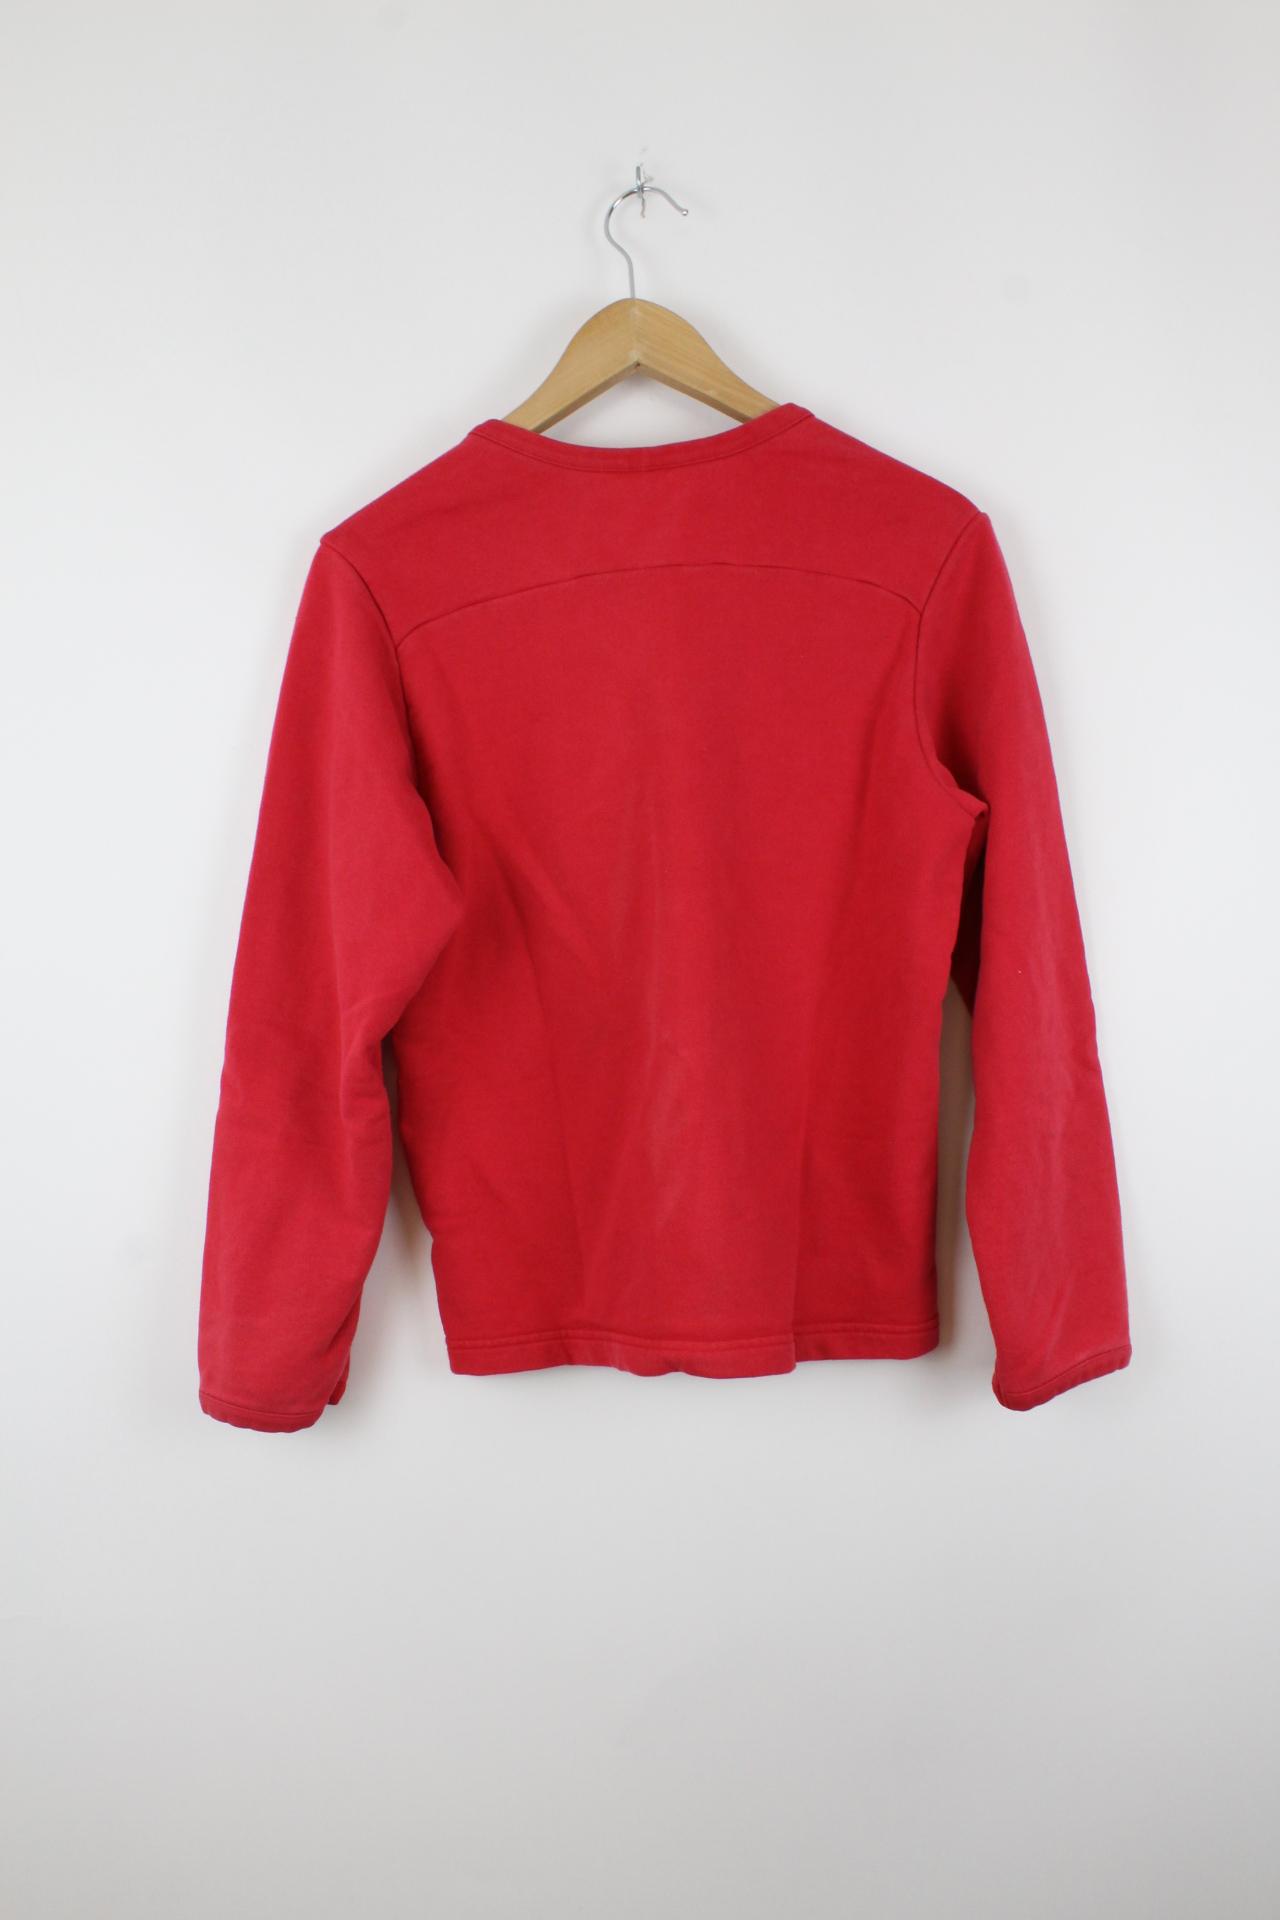 Vintage Adidas Sweater Rot - XS